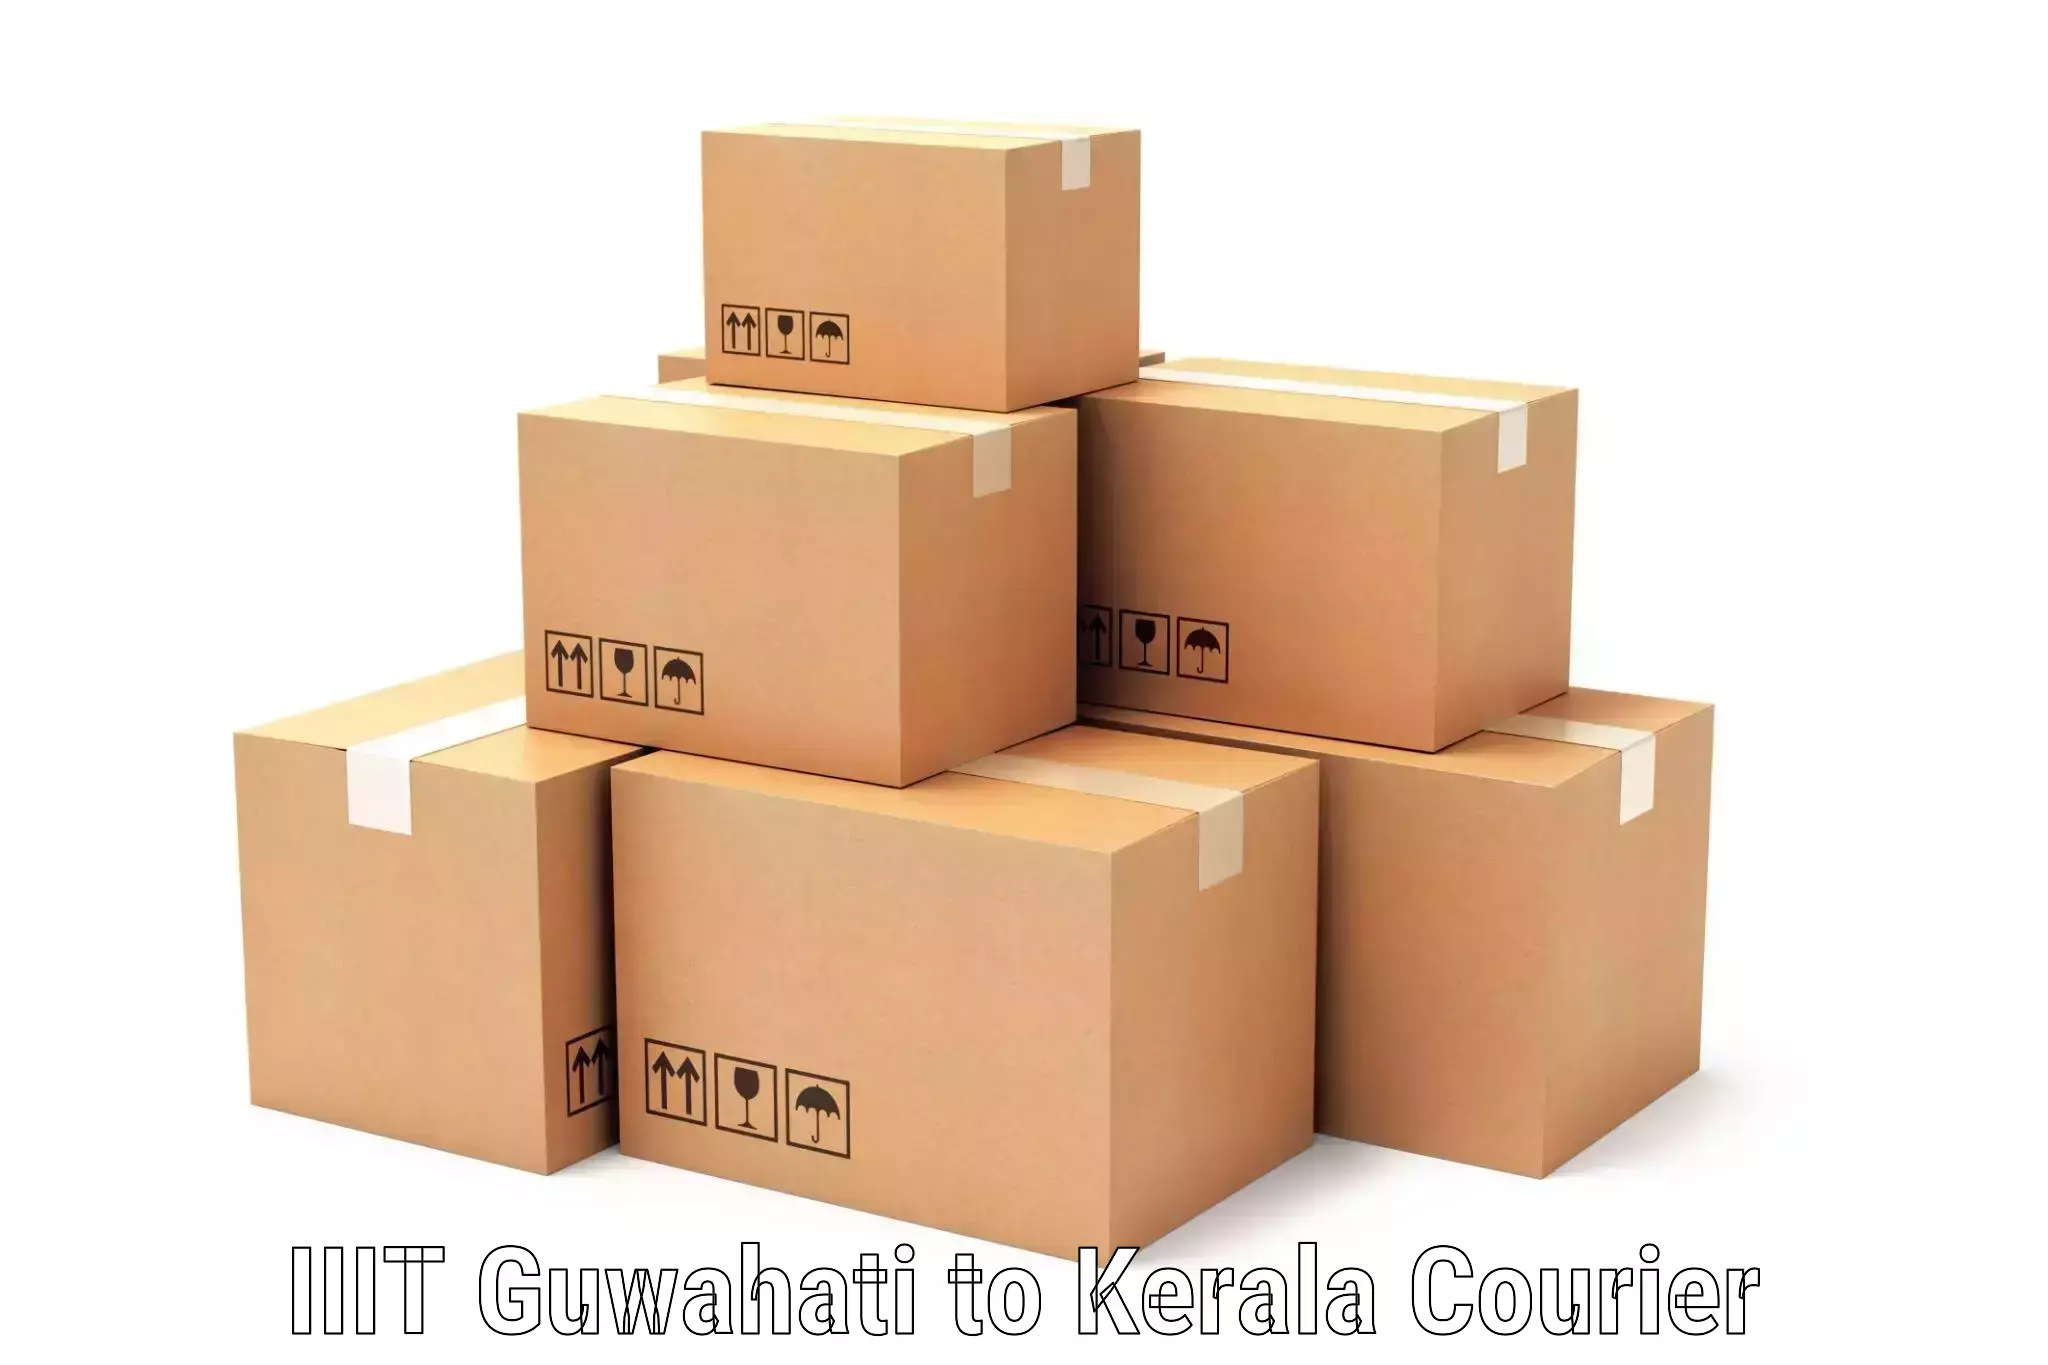 Customizable shipping options IIIT Guwahati to Kerala